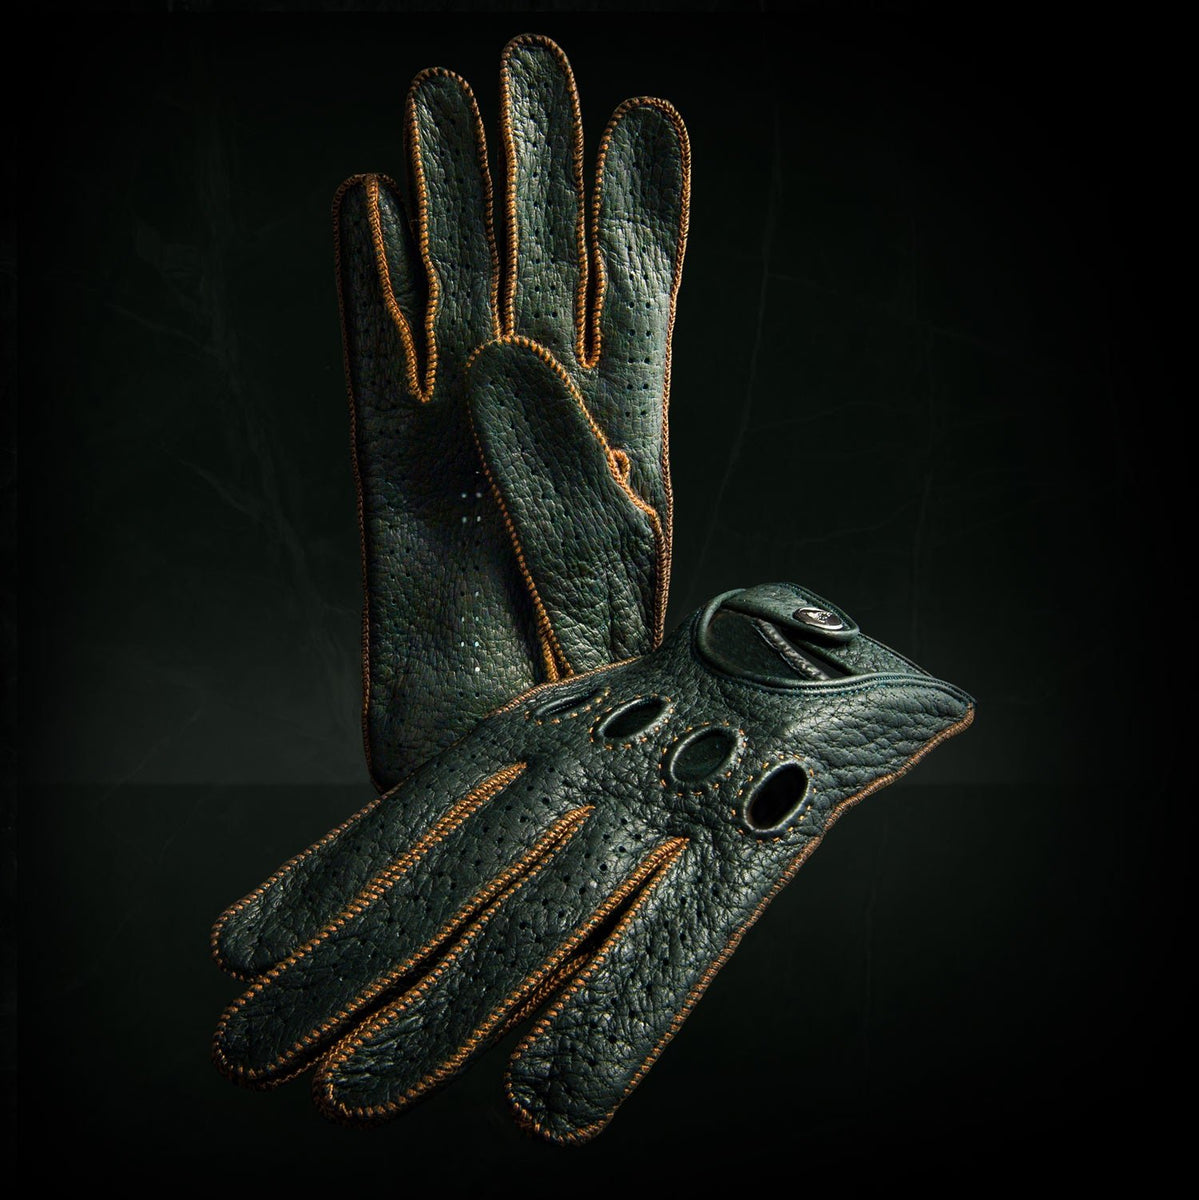 HERMES] Hermes Driving gloves gloves Leather black ladies gloves A